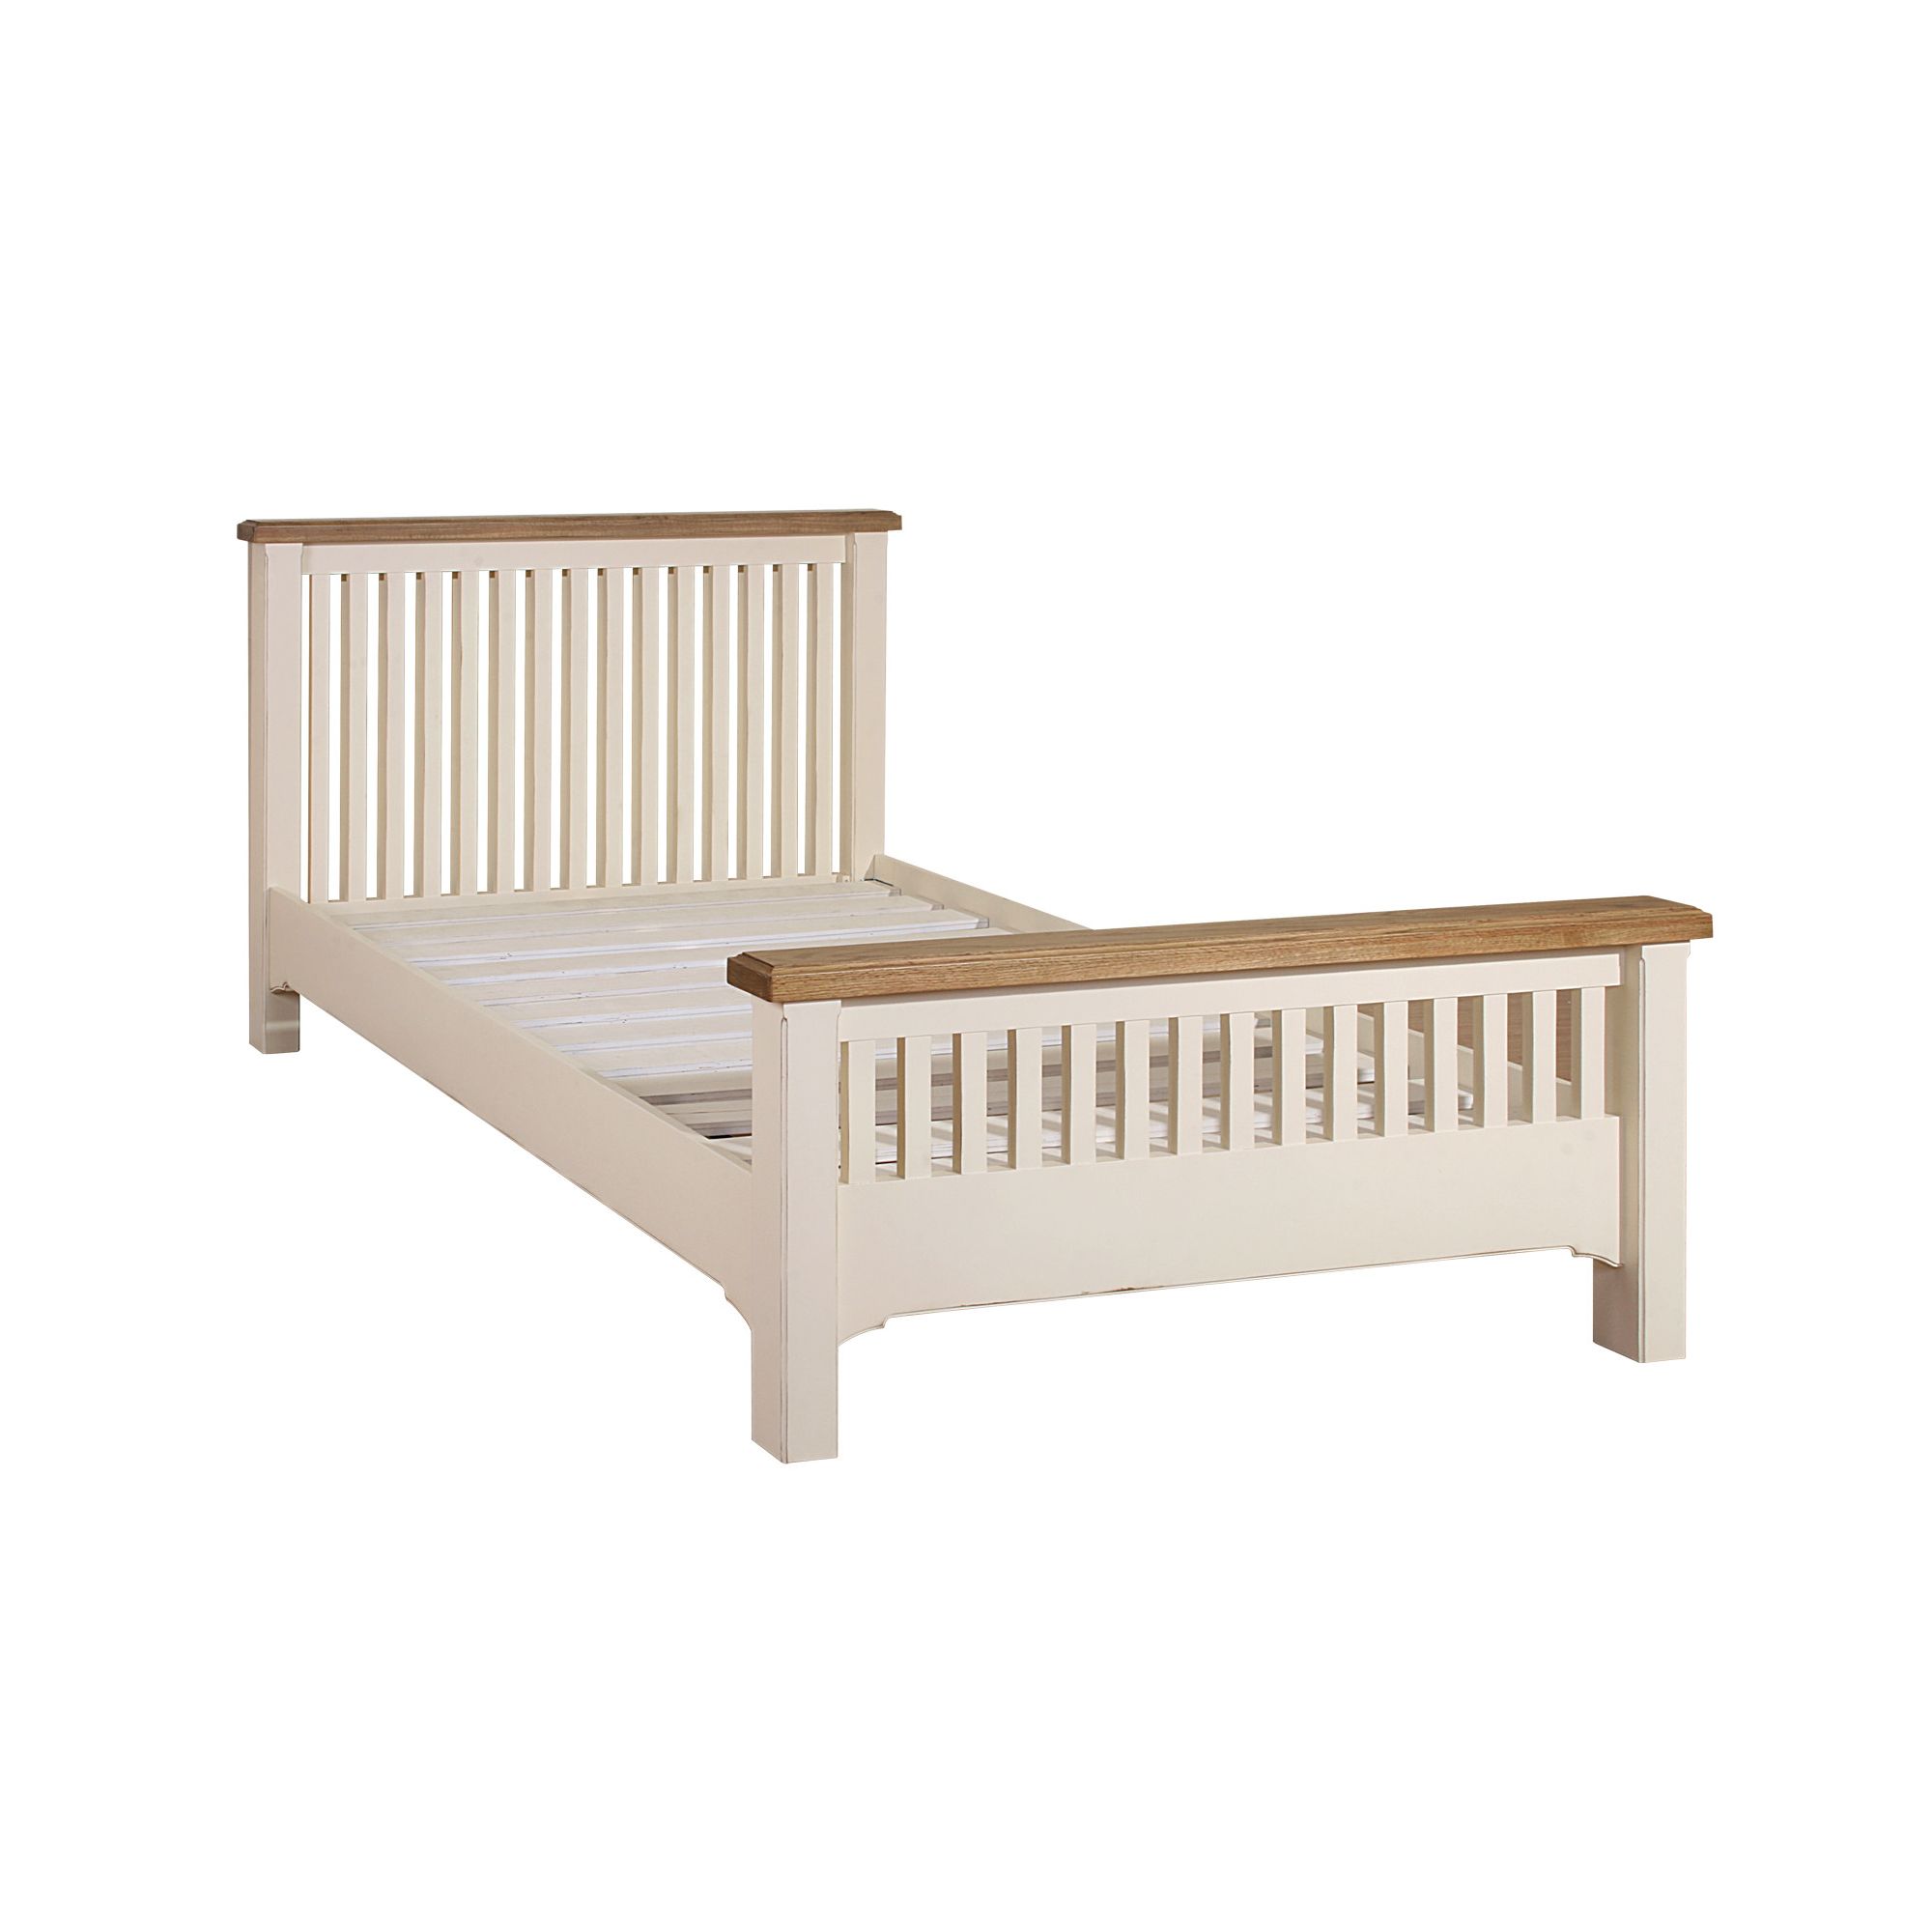 Alterton Furniture Marseille Bed Frame - Single at Tesco Direct